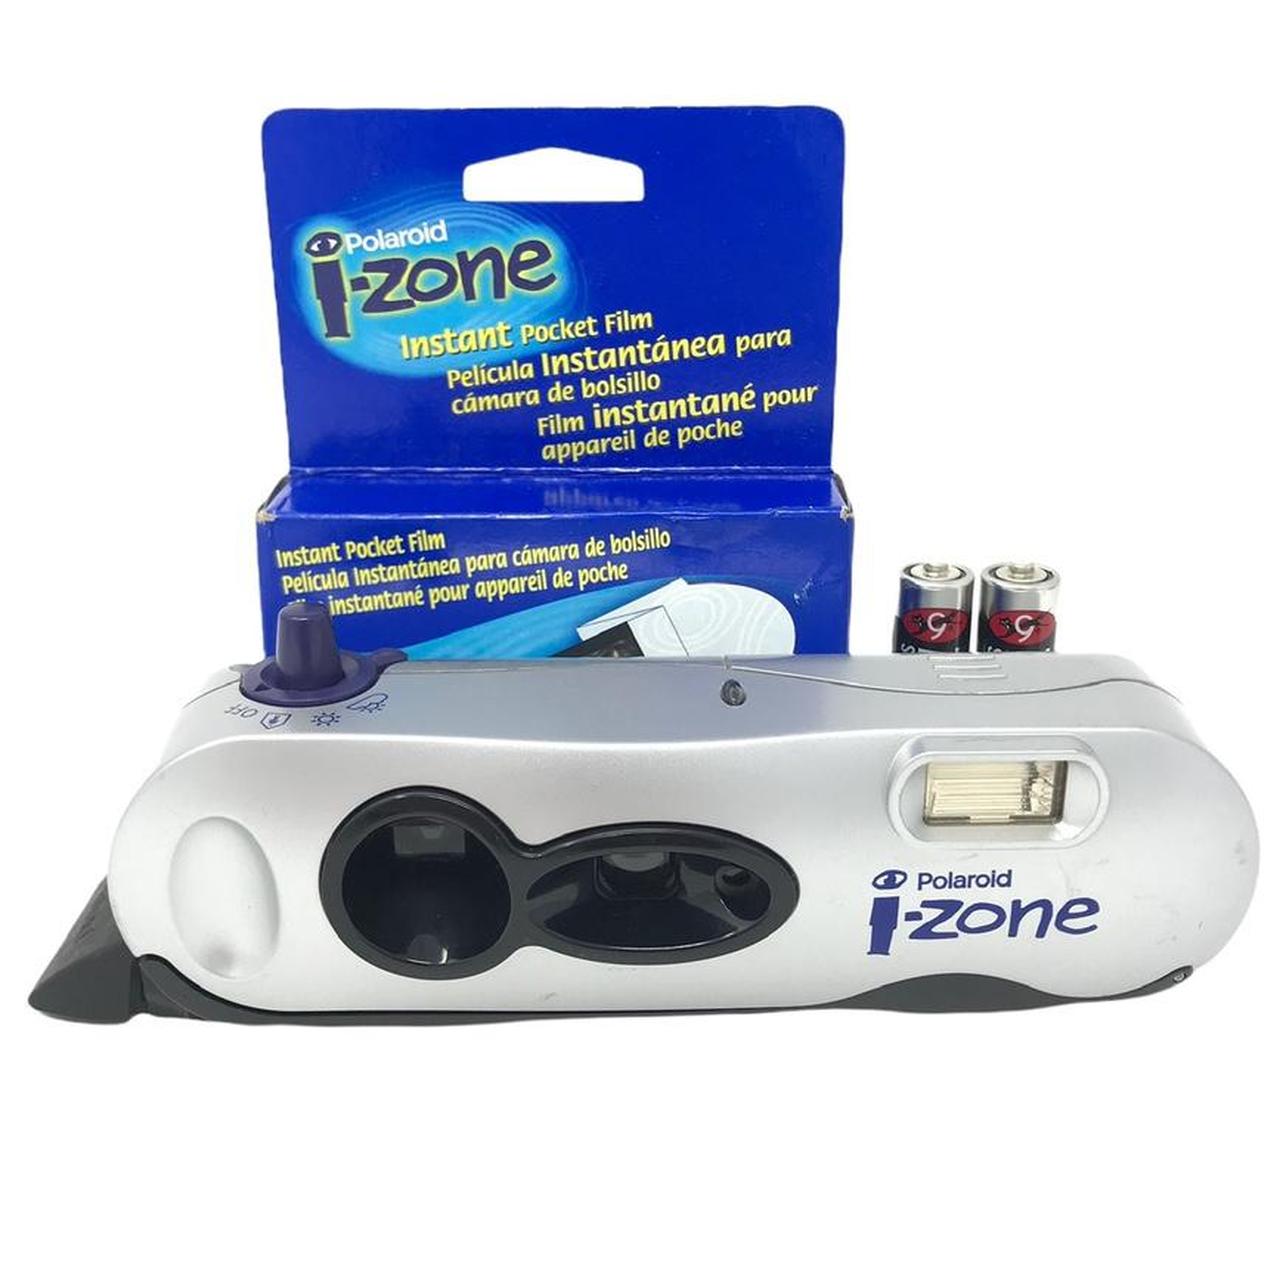 Product Image 1 - Polaroid i-Zone Instant Film Camera

Comes